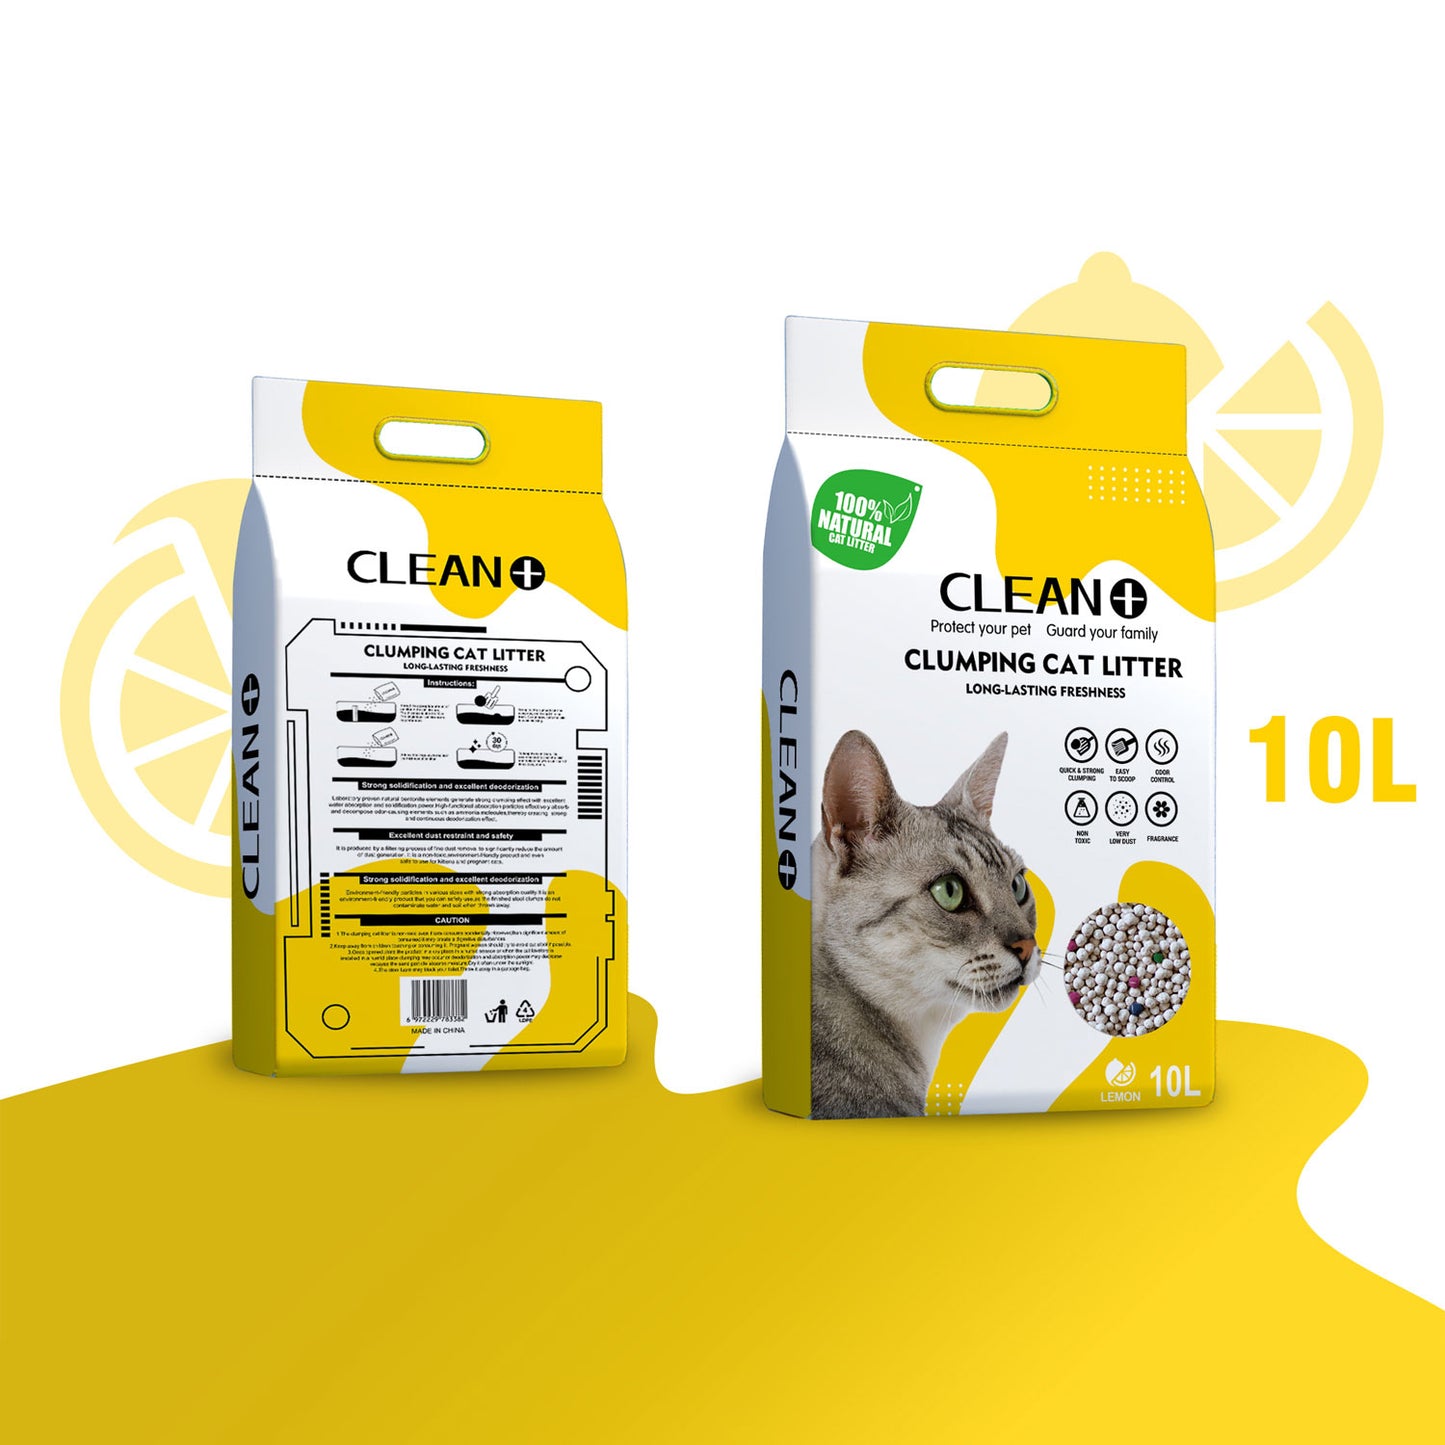 Clean + : Clumping Cat Litter : 10L : Lemon